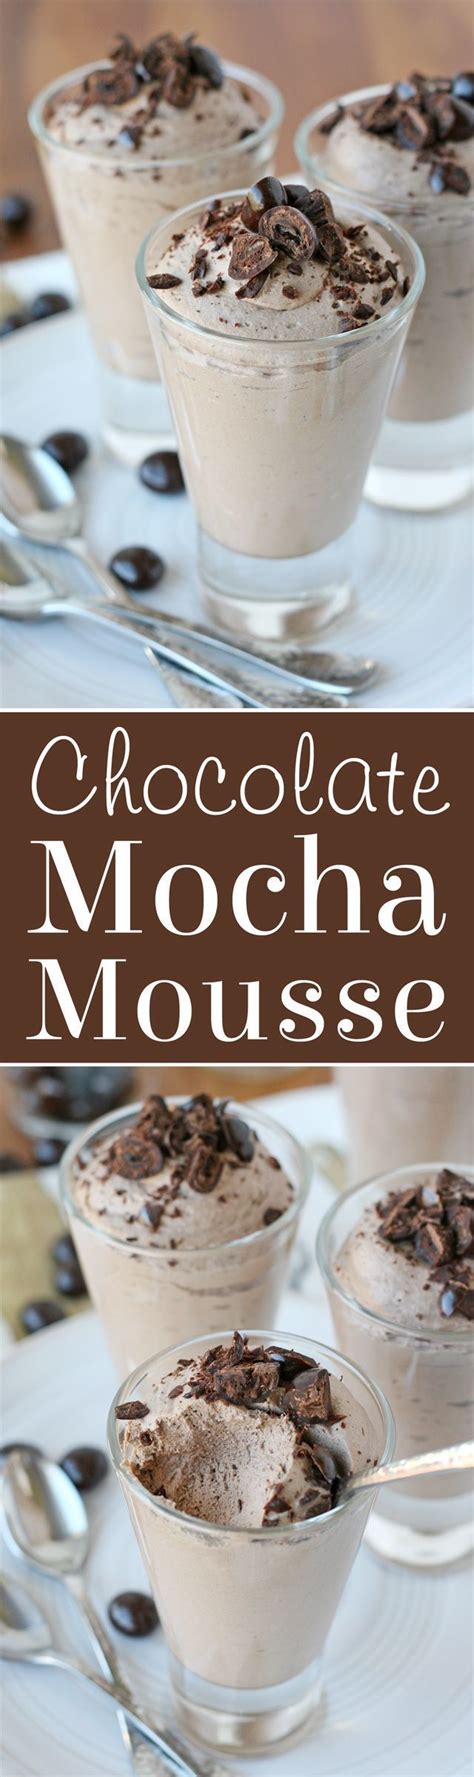 Chocolate Mocha Mousse Mousse Recipes Sweet Recipes Desserts